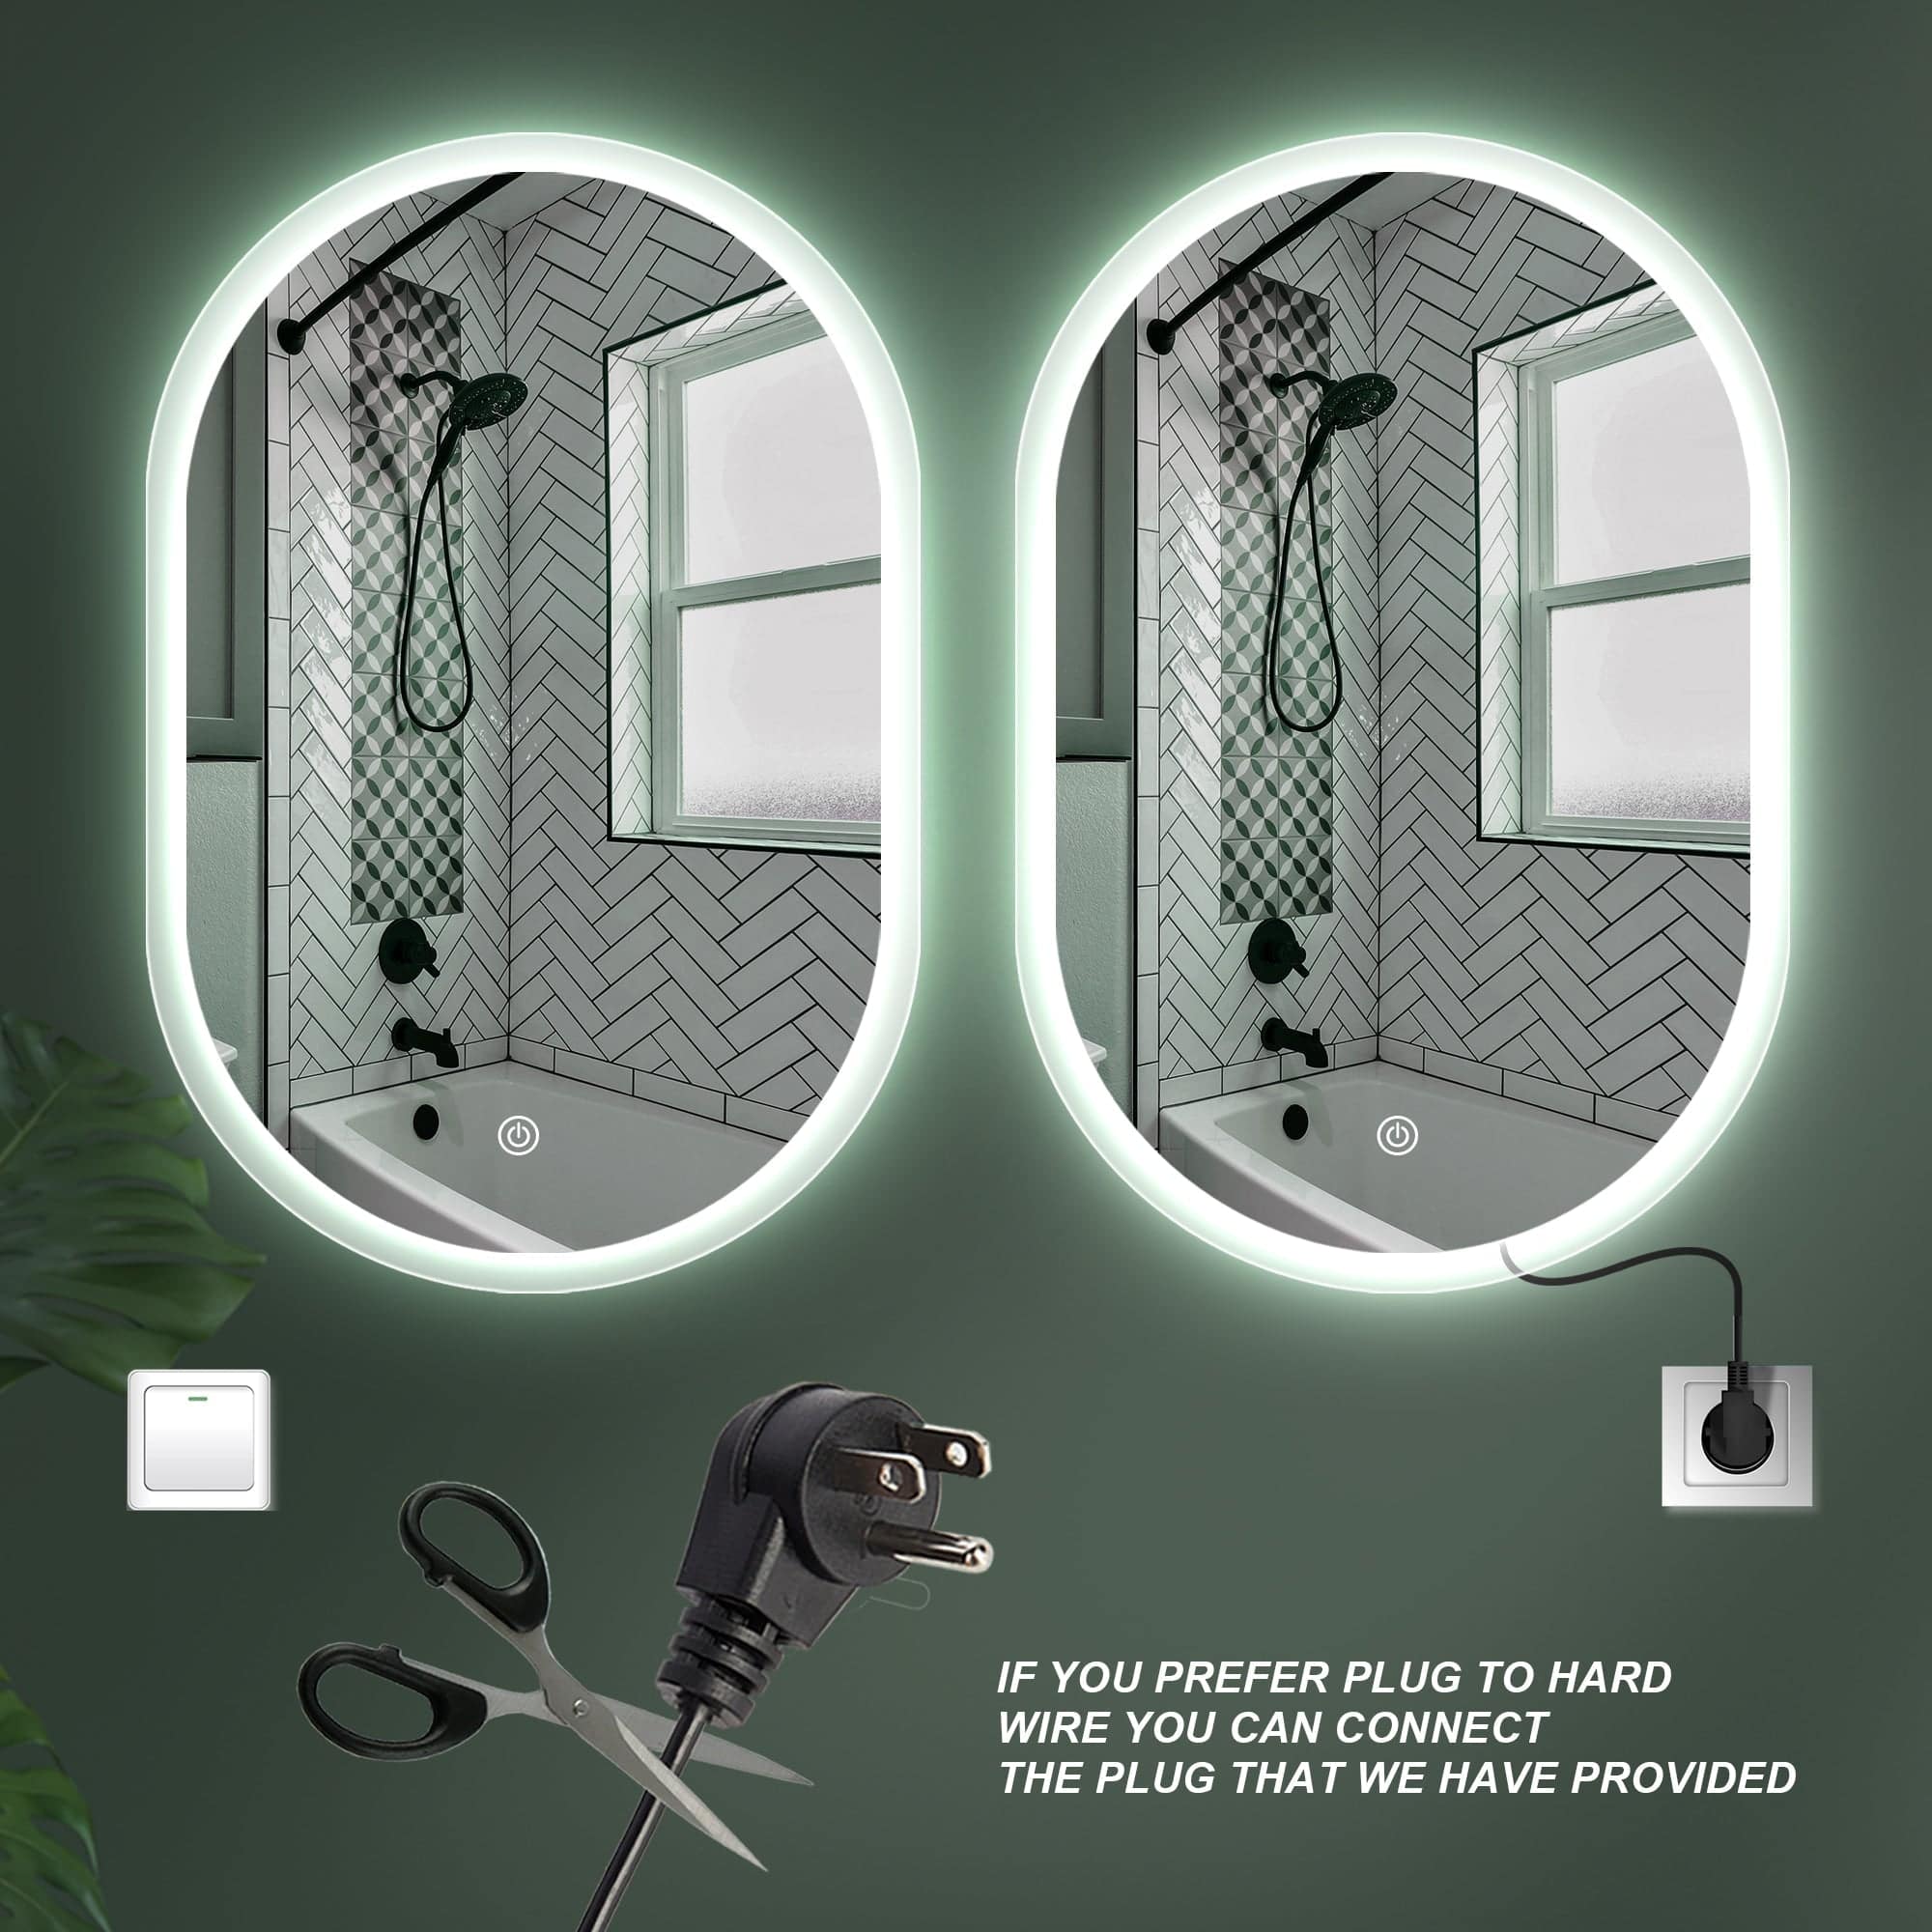 26X18 Inches Wall Mounted Vertical Frameless Oval Smart Lighten Bathroom Mirror - Venetio